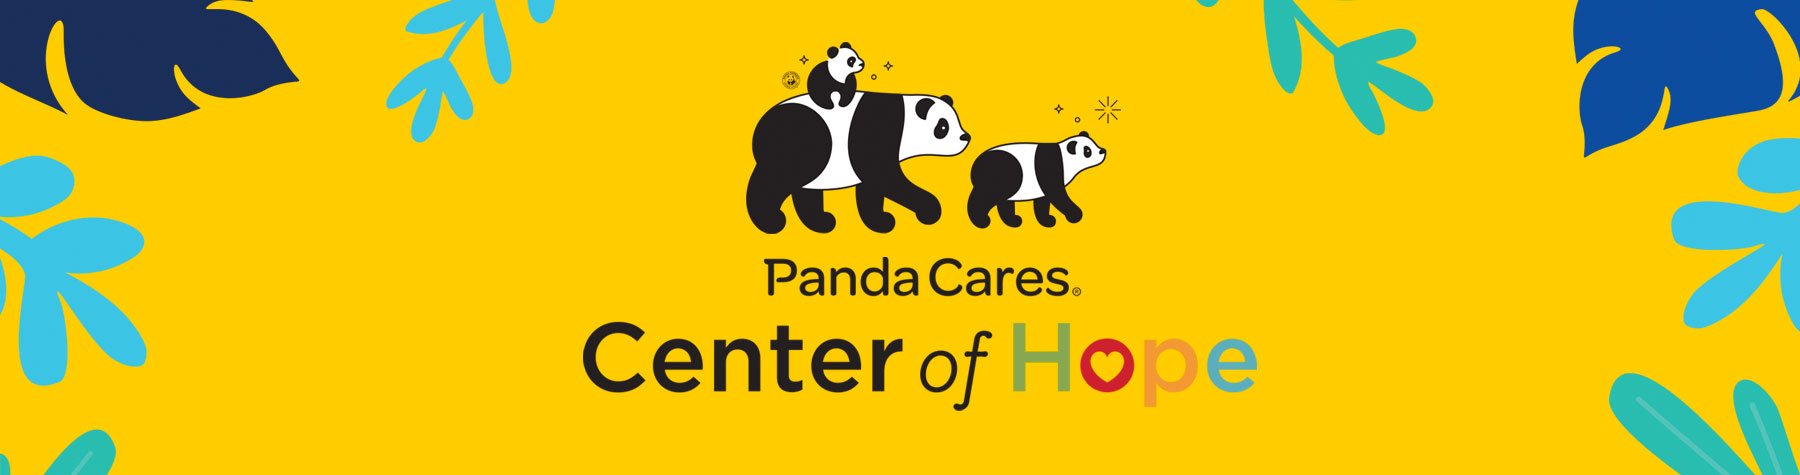 Panda Cares - Center of Hope